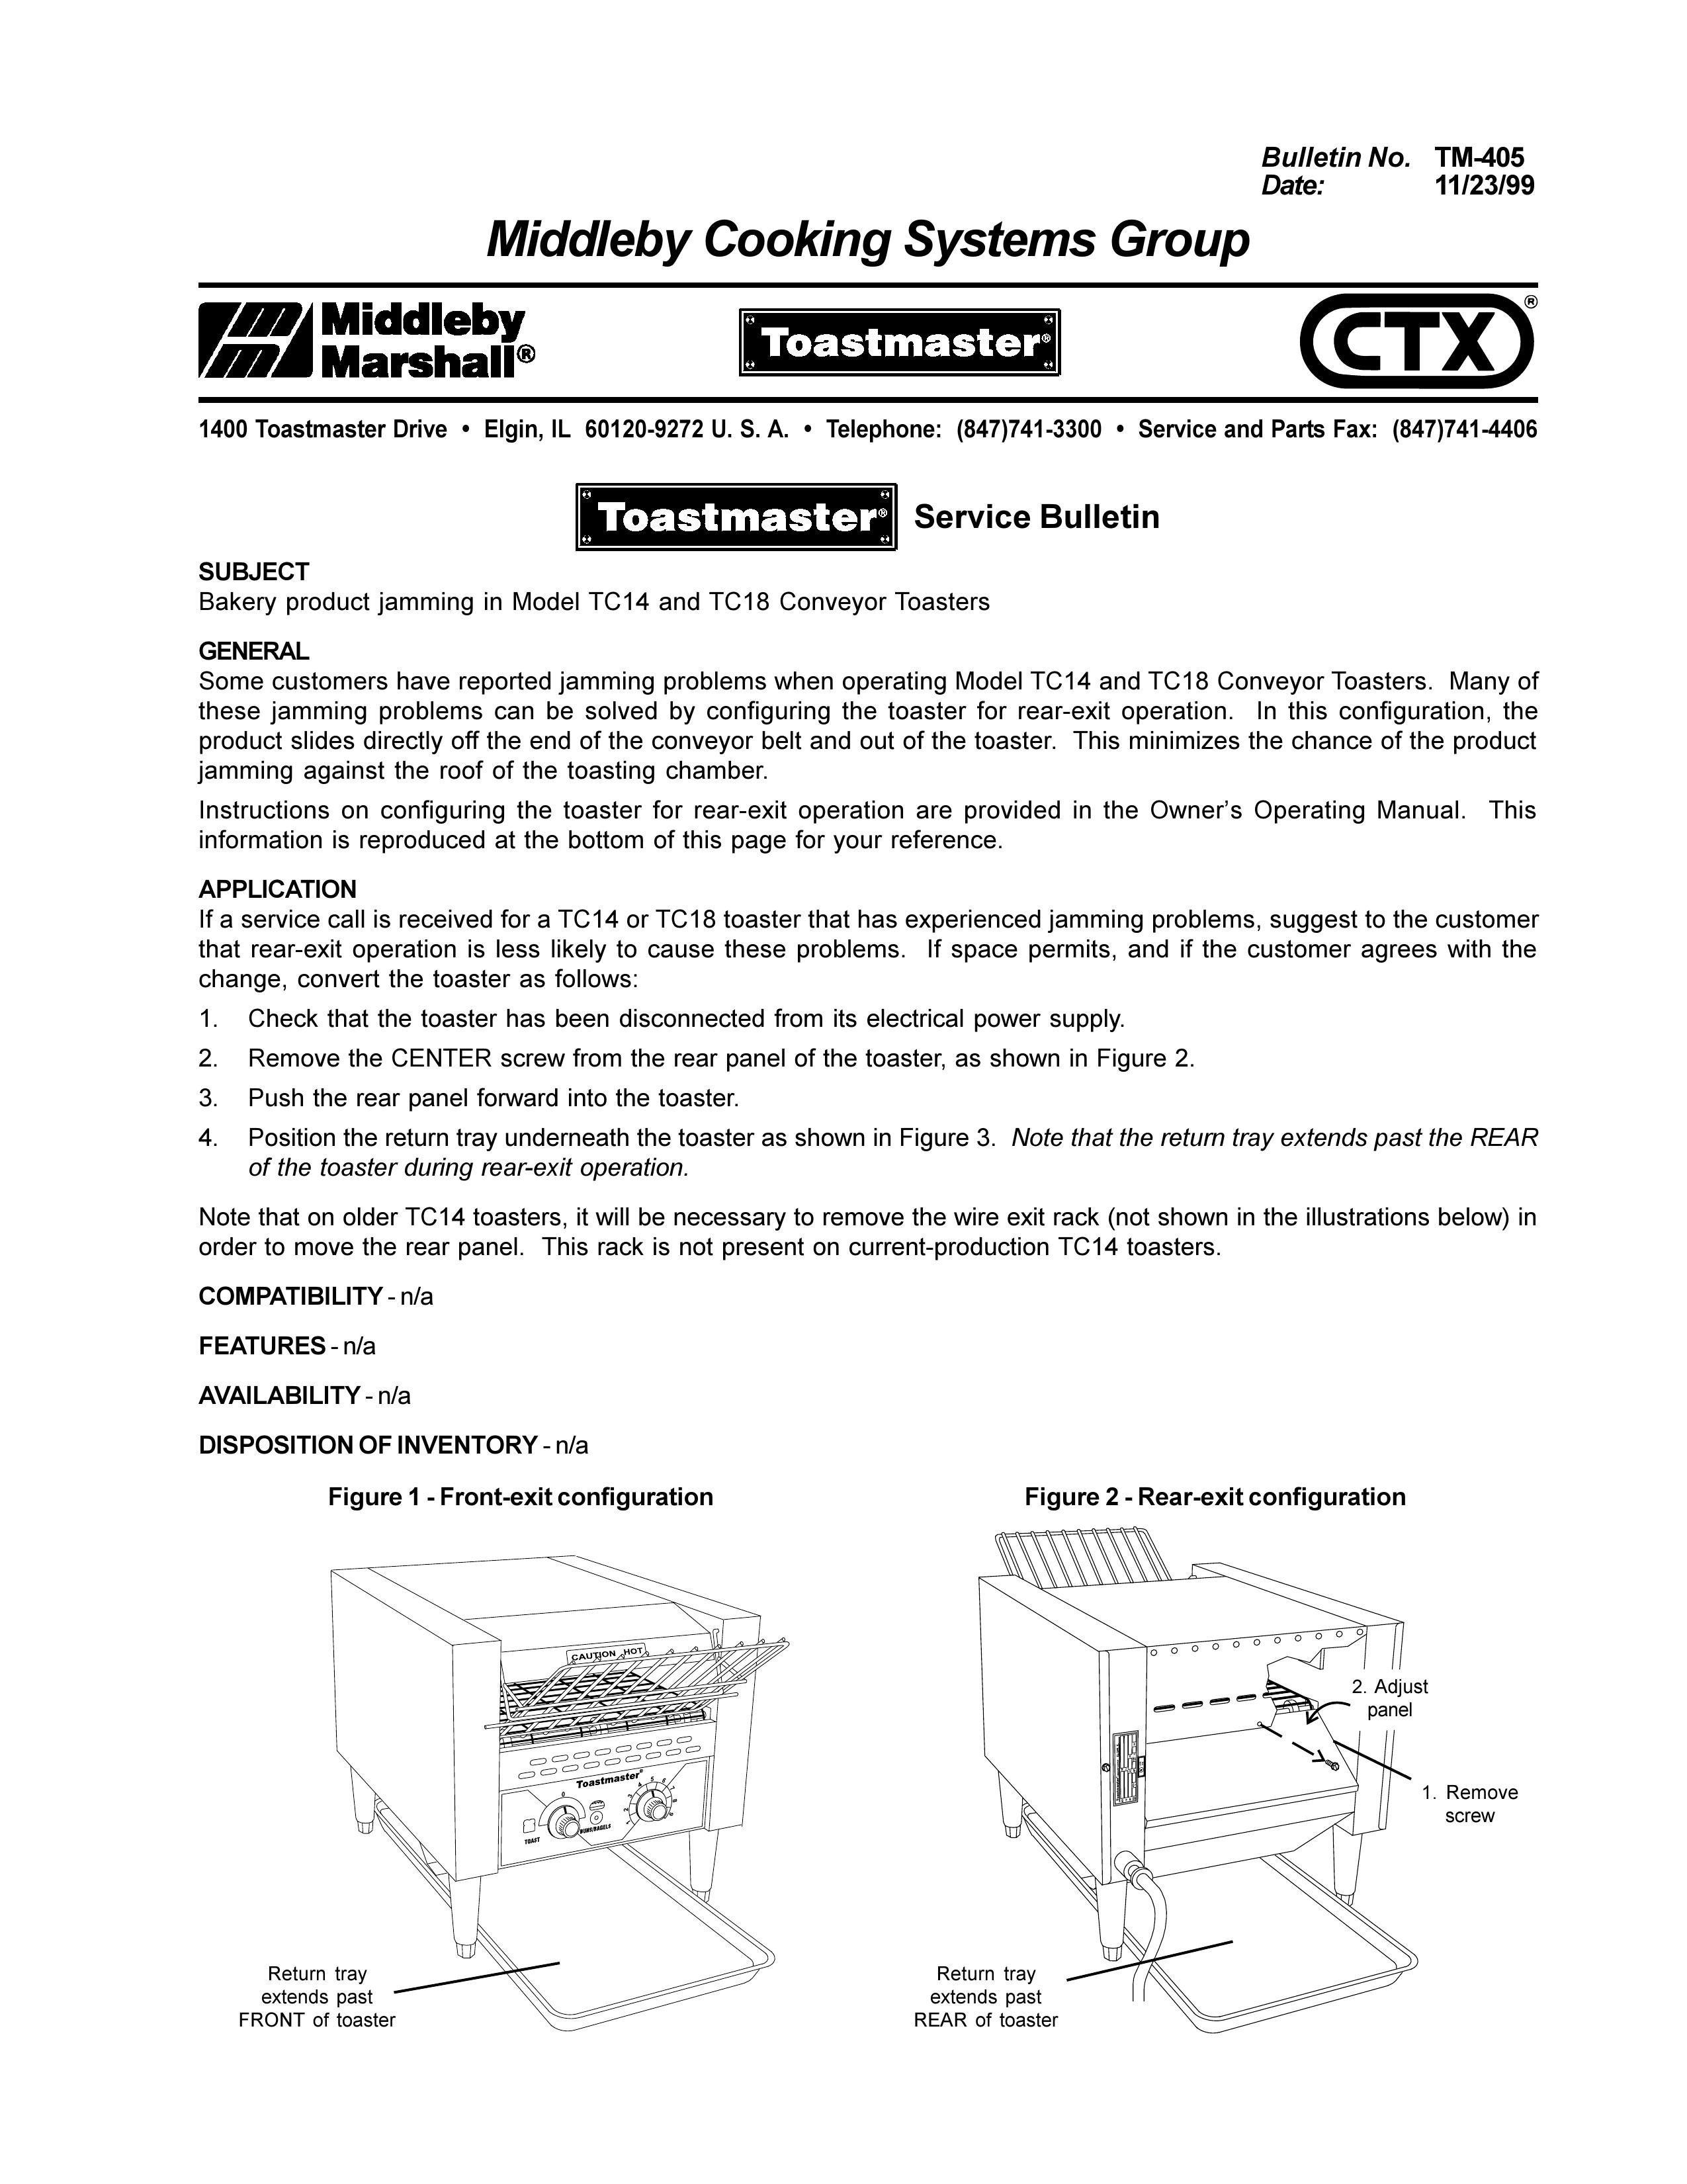 Middleby Marshall TC14 Toaster User Manual